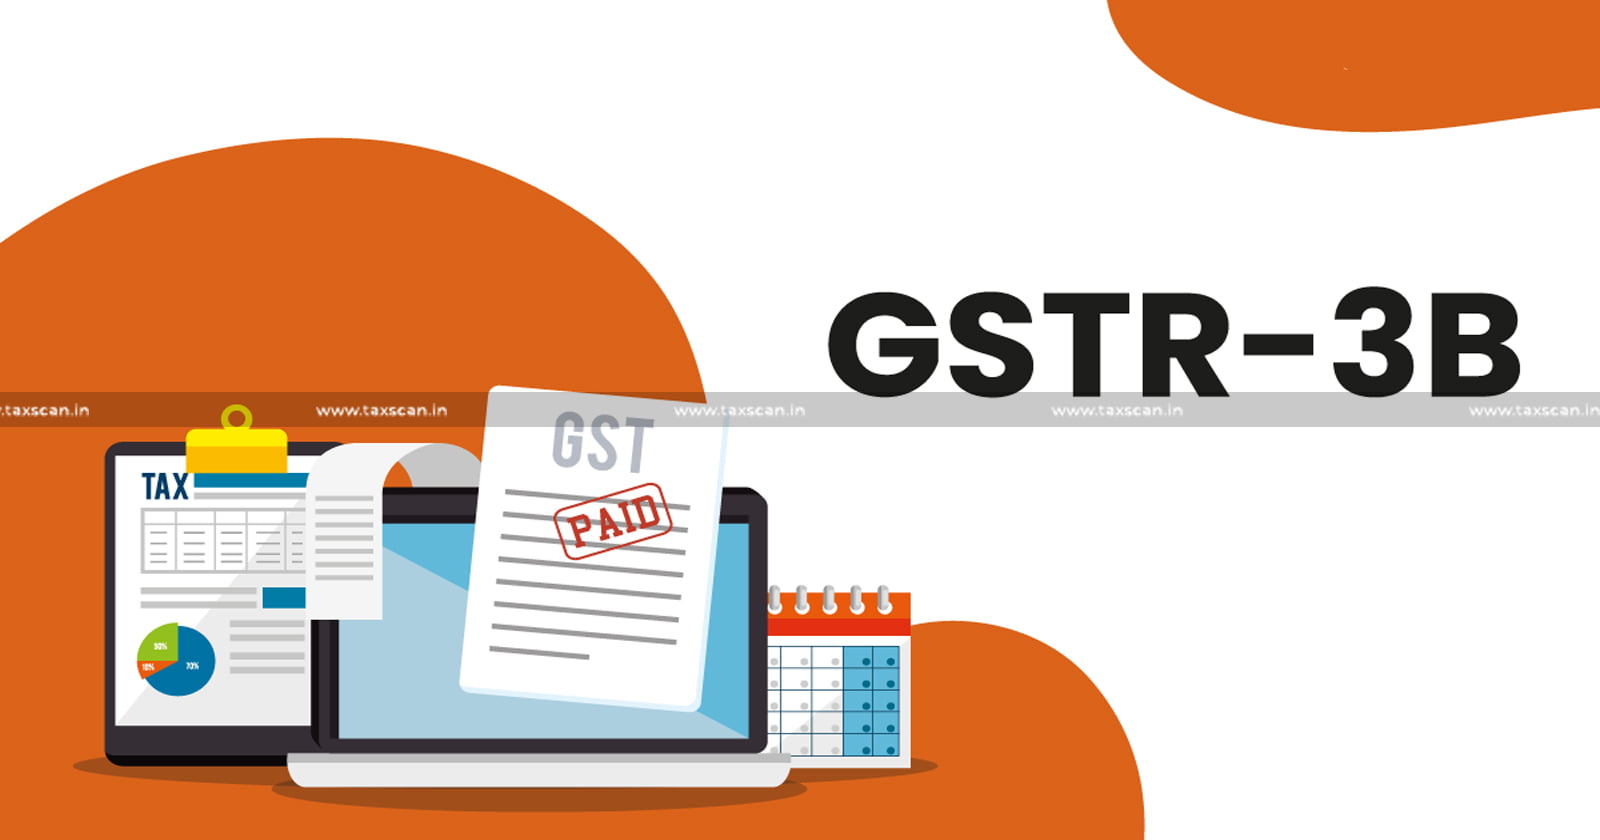 GST Rules - GST Rules Amendment - Delhi Notifies GST Rules - GST - Cancellation of GST Registration - GST Registration - Non-furnishing of GSTR-3B - GSTR-3B - GSTR - Delhi Goods and Services Tax - taxscan